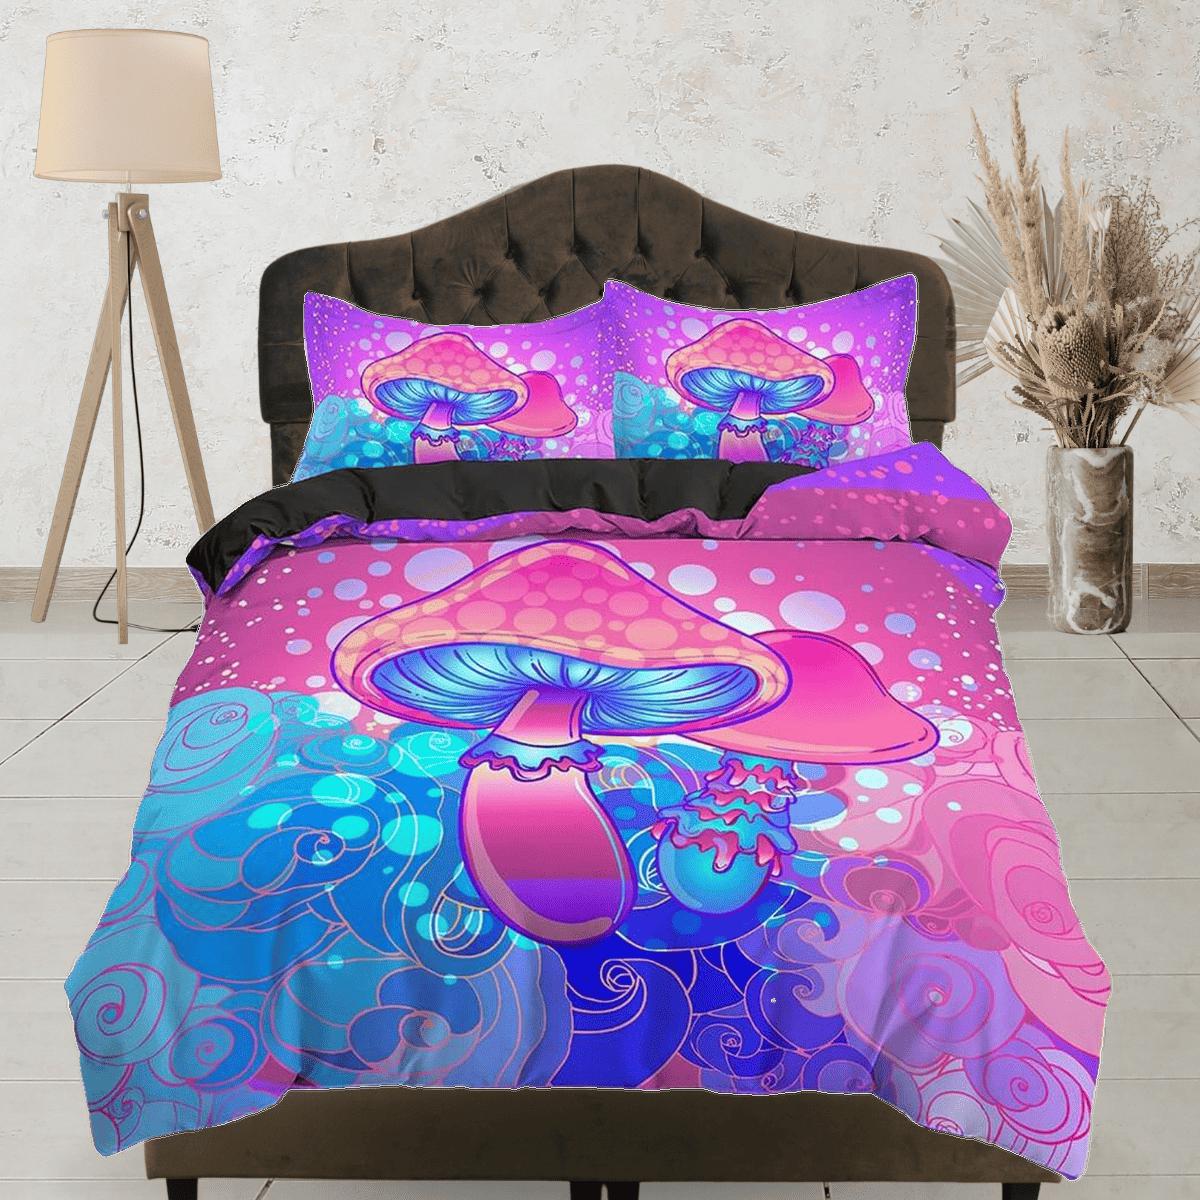 daintyduvet Psychedelic blue pink duvet cover hippie mushroom bedding set full, queen king, preppy dorm bedding indie room decor aesthetic bedspread y2k